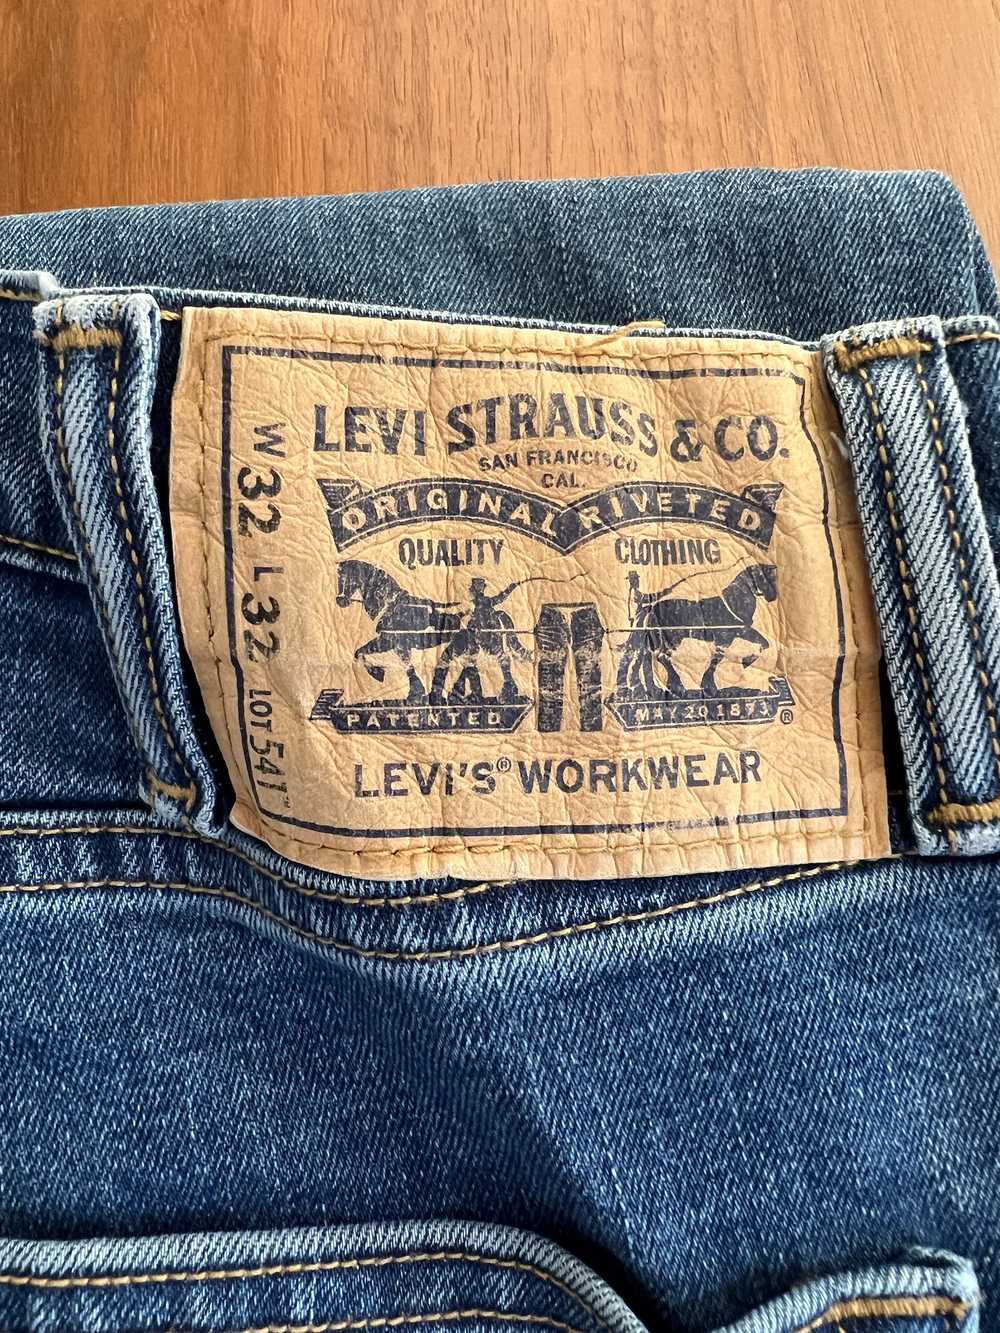 Levi's Levi's Workwear 541 32x32 - image 3